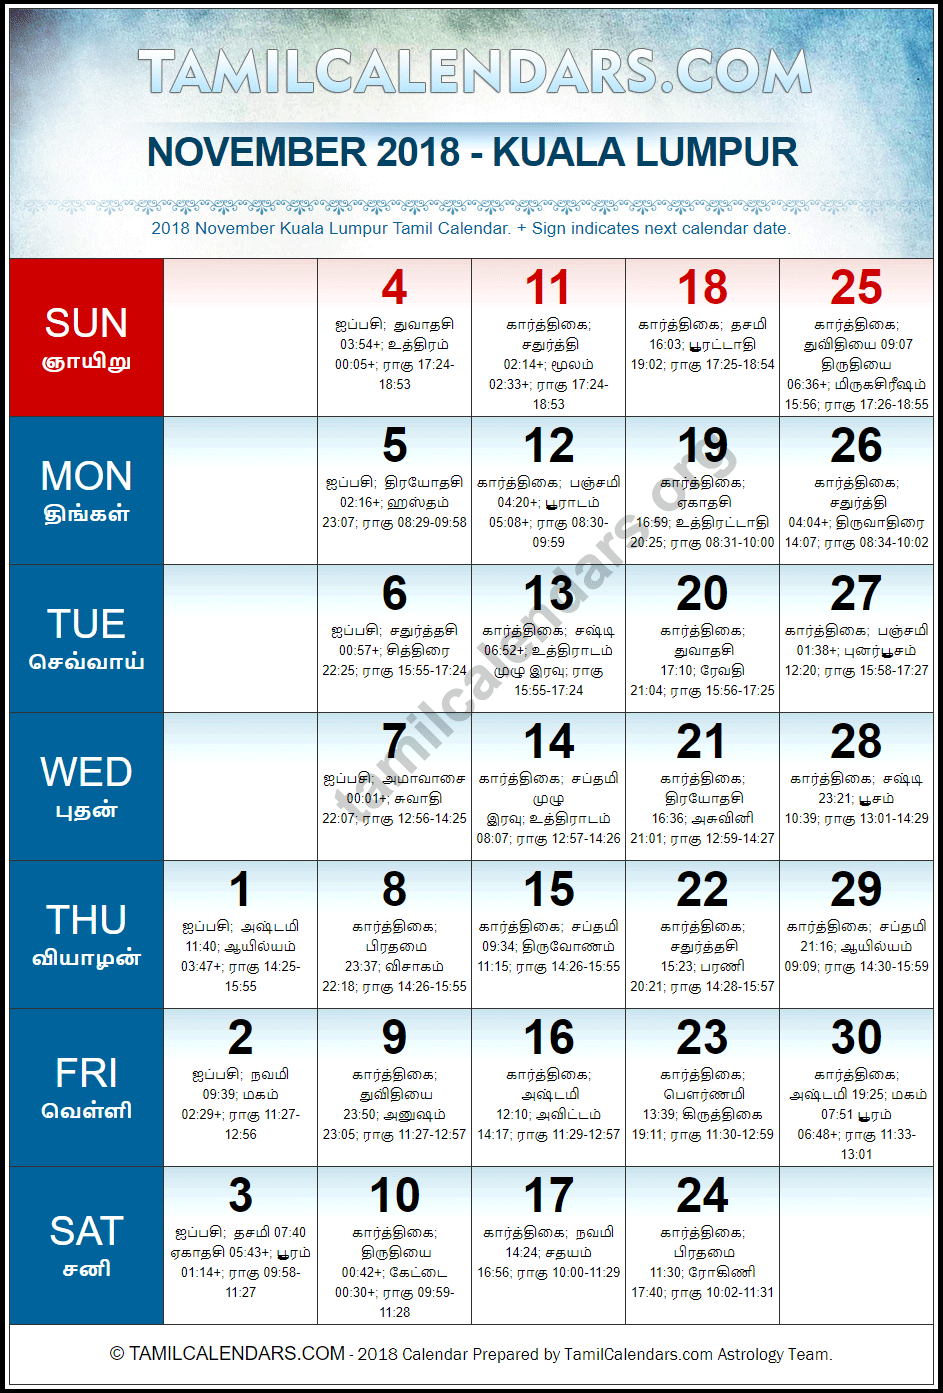 November 2018 Tamil Calendar for Malaysia (Kuala Lumpur)